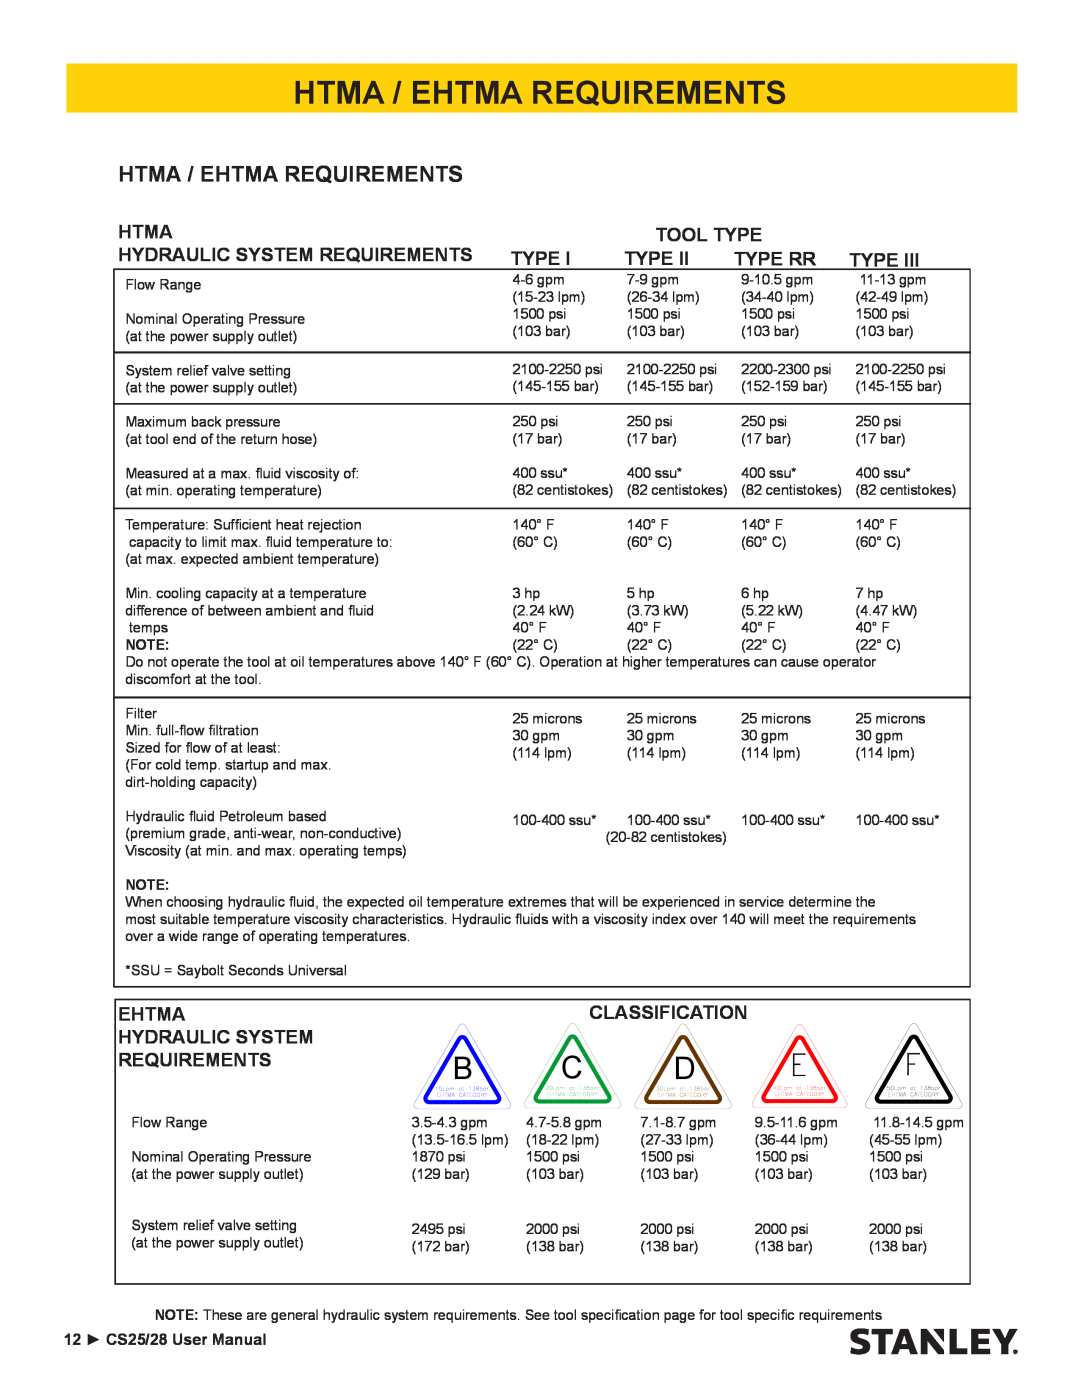 Stanley Black & Decker CS25/28 manual Htma / Ehtma Requirements 